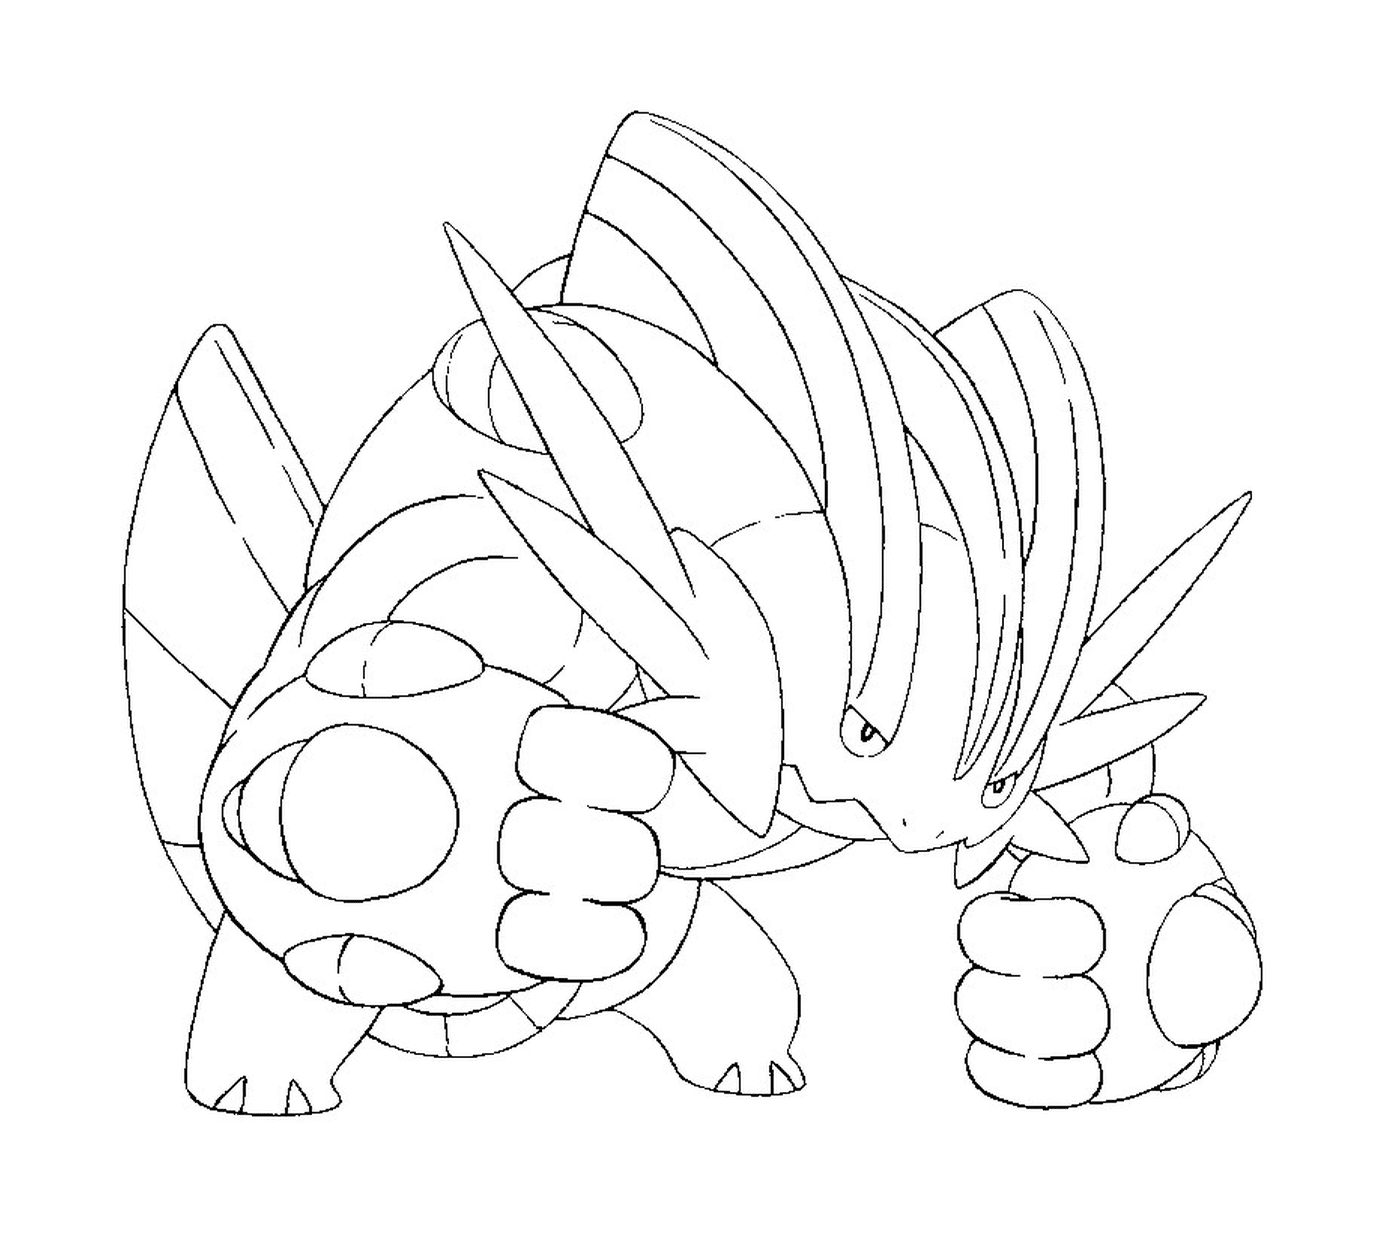  Laggron, ein amphibiöser Pokémon 